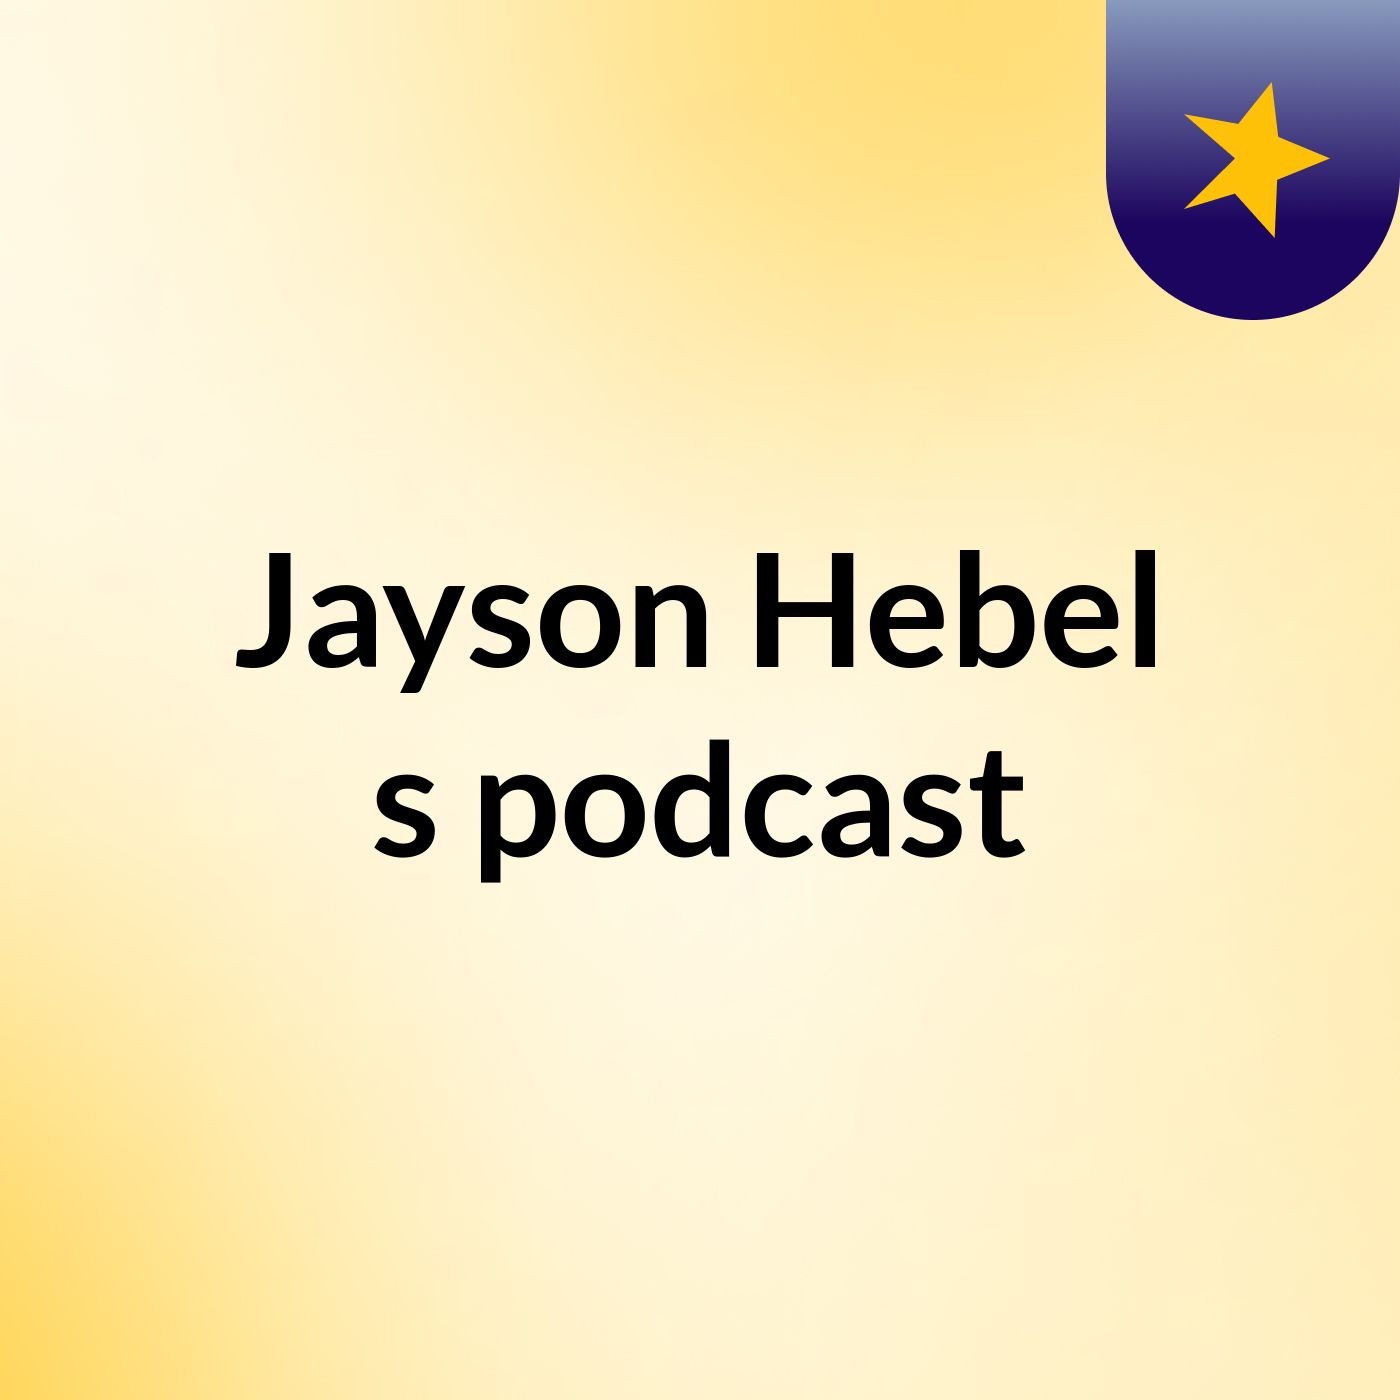 Episode 3 - Jayson Hebel's podcast